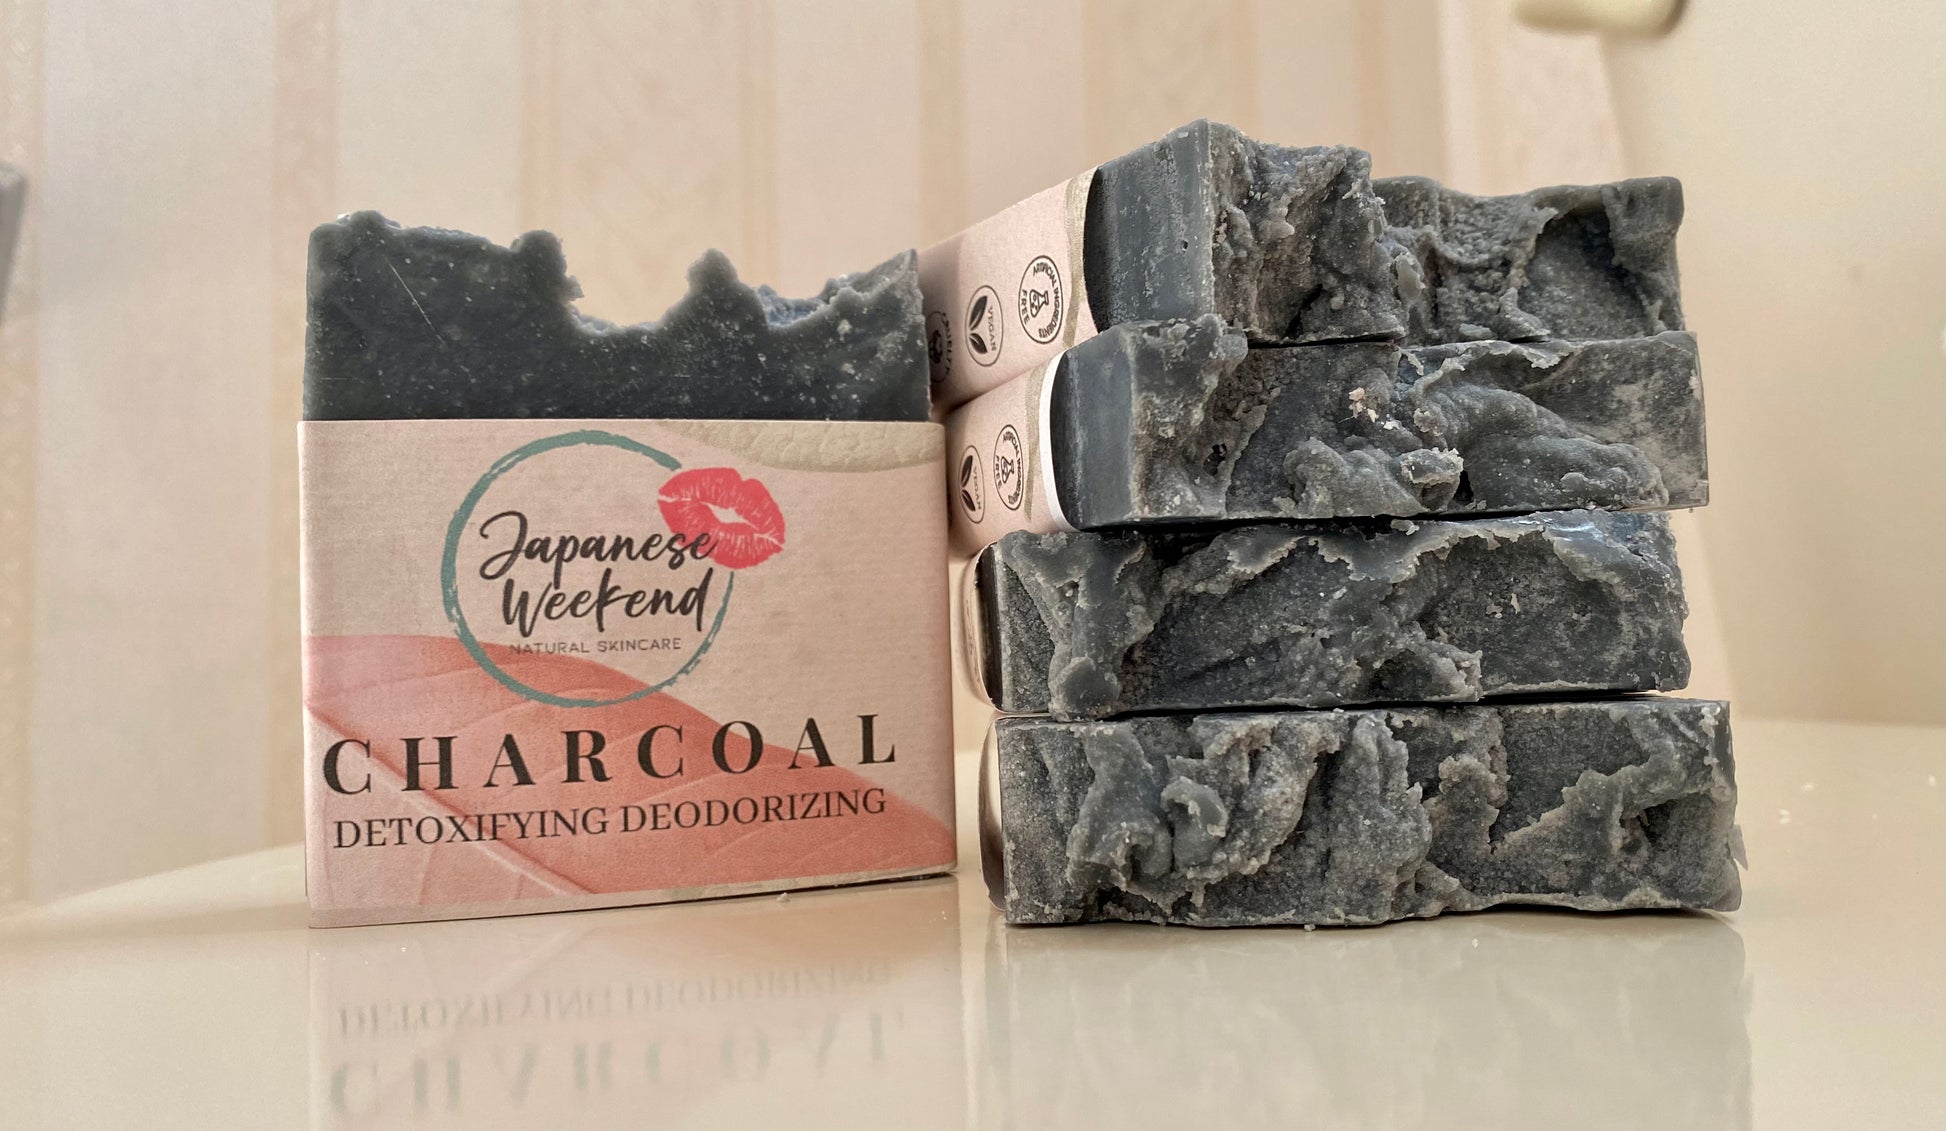 Japanese Weekend Charcoal Soap Detoxifying Deodorizing Bar  All Natural Vegan Eco-friendly  Pure Small Business Artisan Handmade